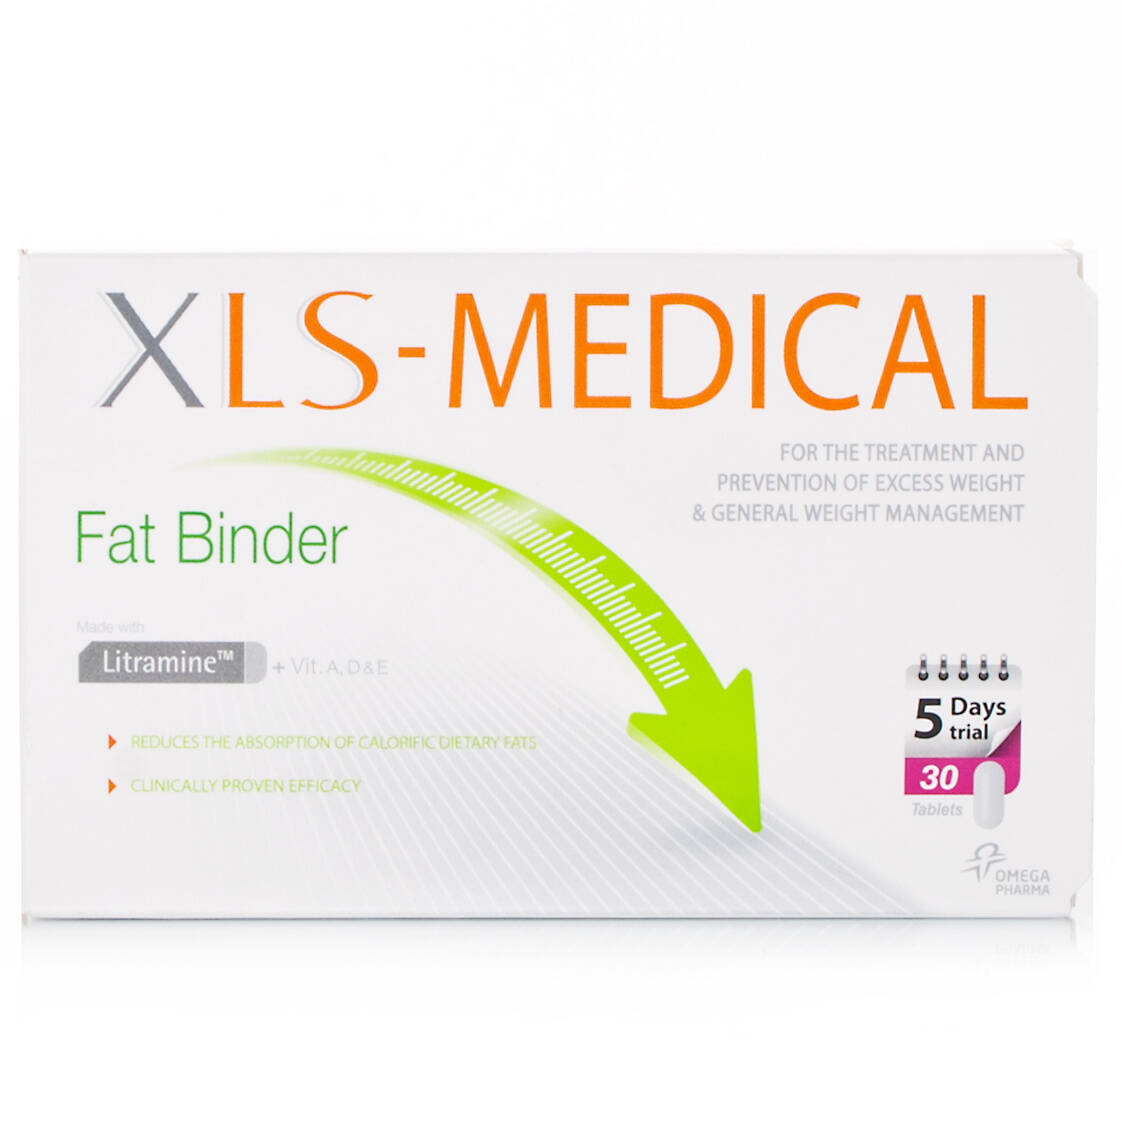 Xls-Medical Fat Binder - 30 tablets (5 day supply)